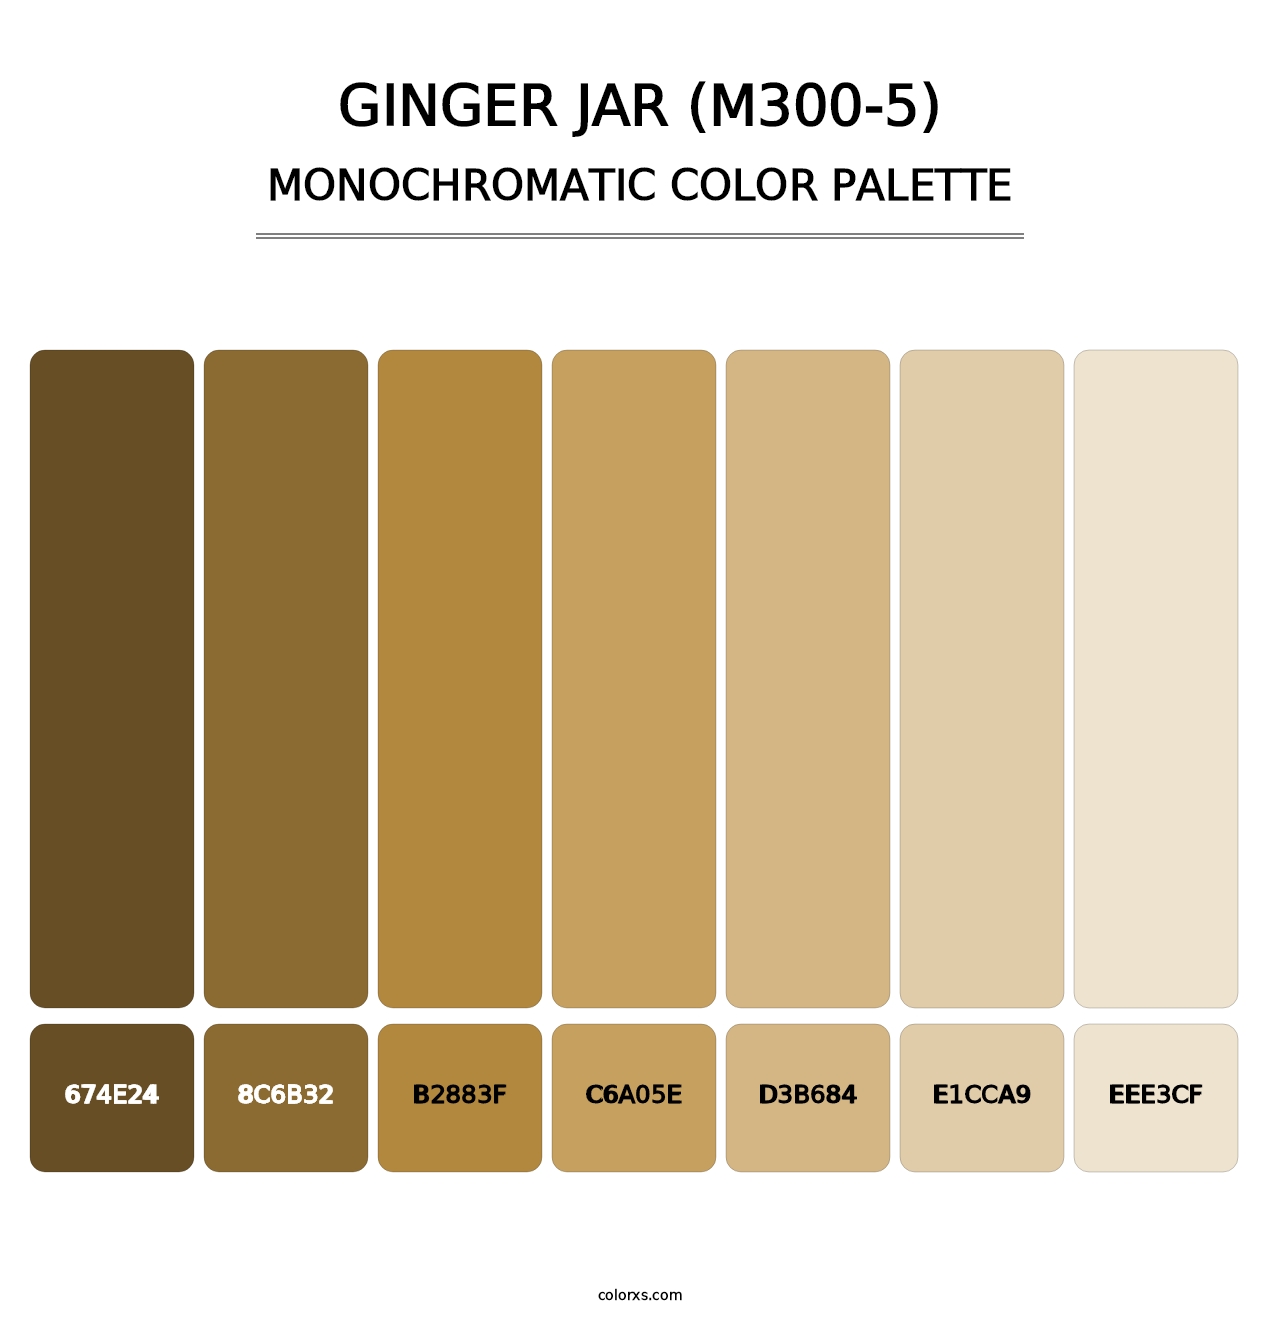 Ginger Jar (M300-5) - Monochromatic Color Palette